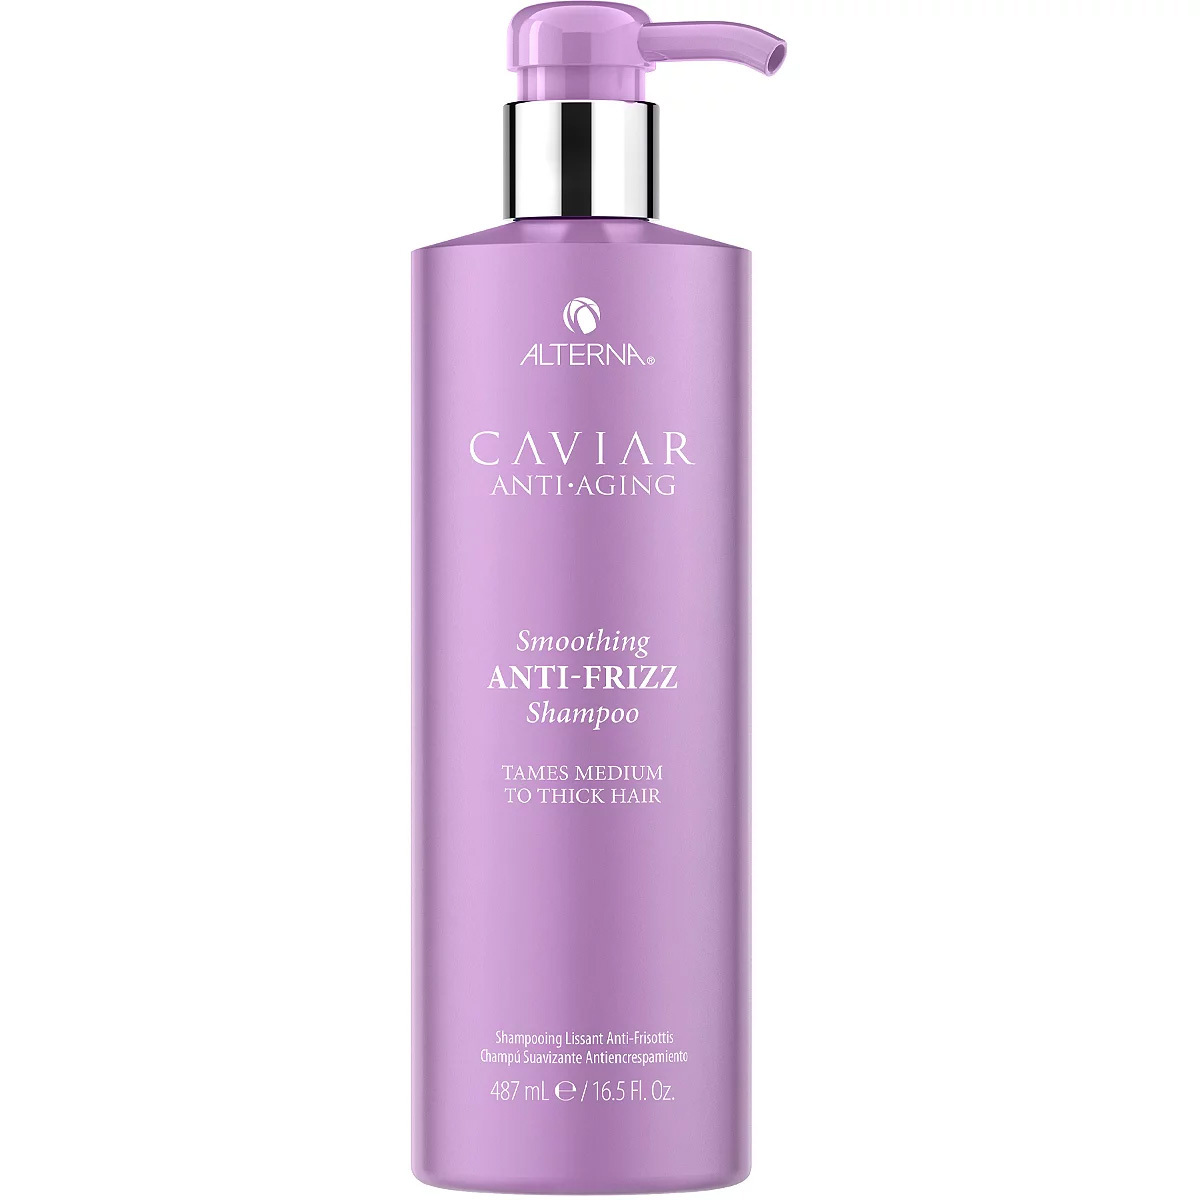 ALTERNA Caviar Anti-Aging Smoothing Anti-Frizz Shampoo